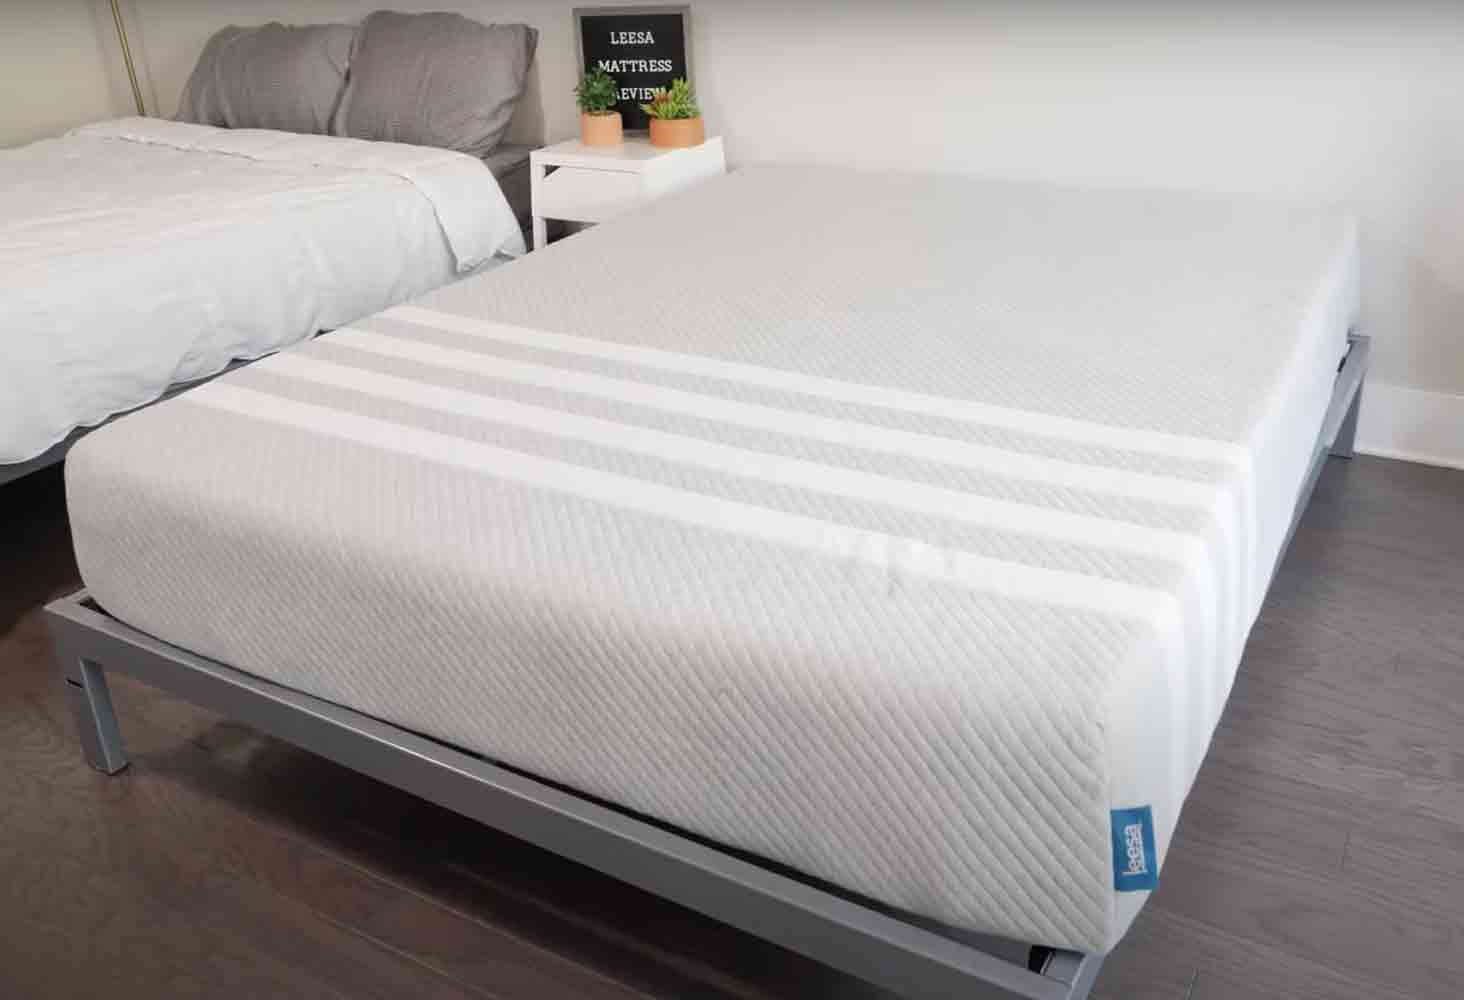 twinbed belly sleeper mattress